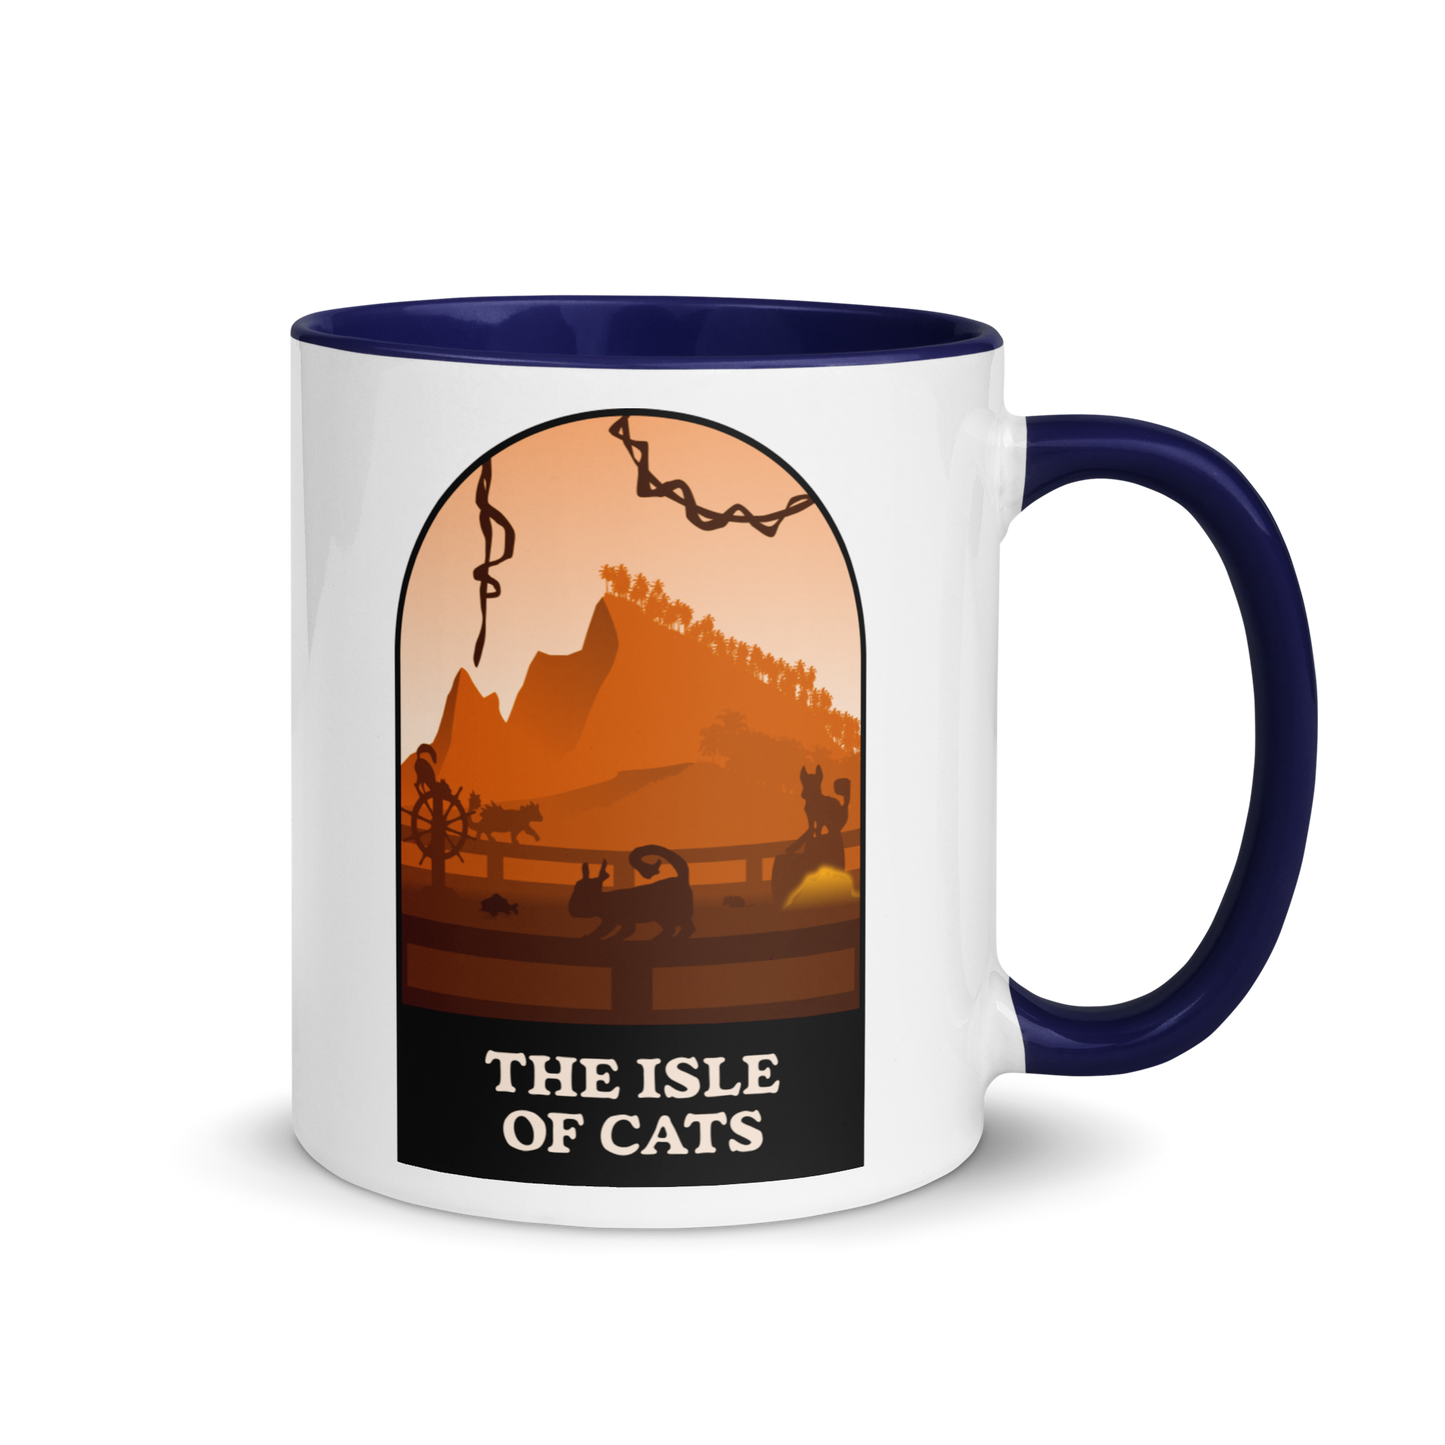 Isle of Cats (Orange) Minimalist Board Game Mug